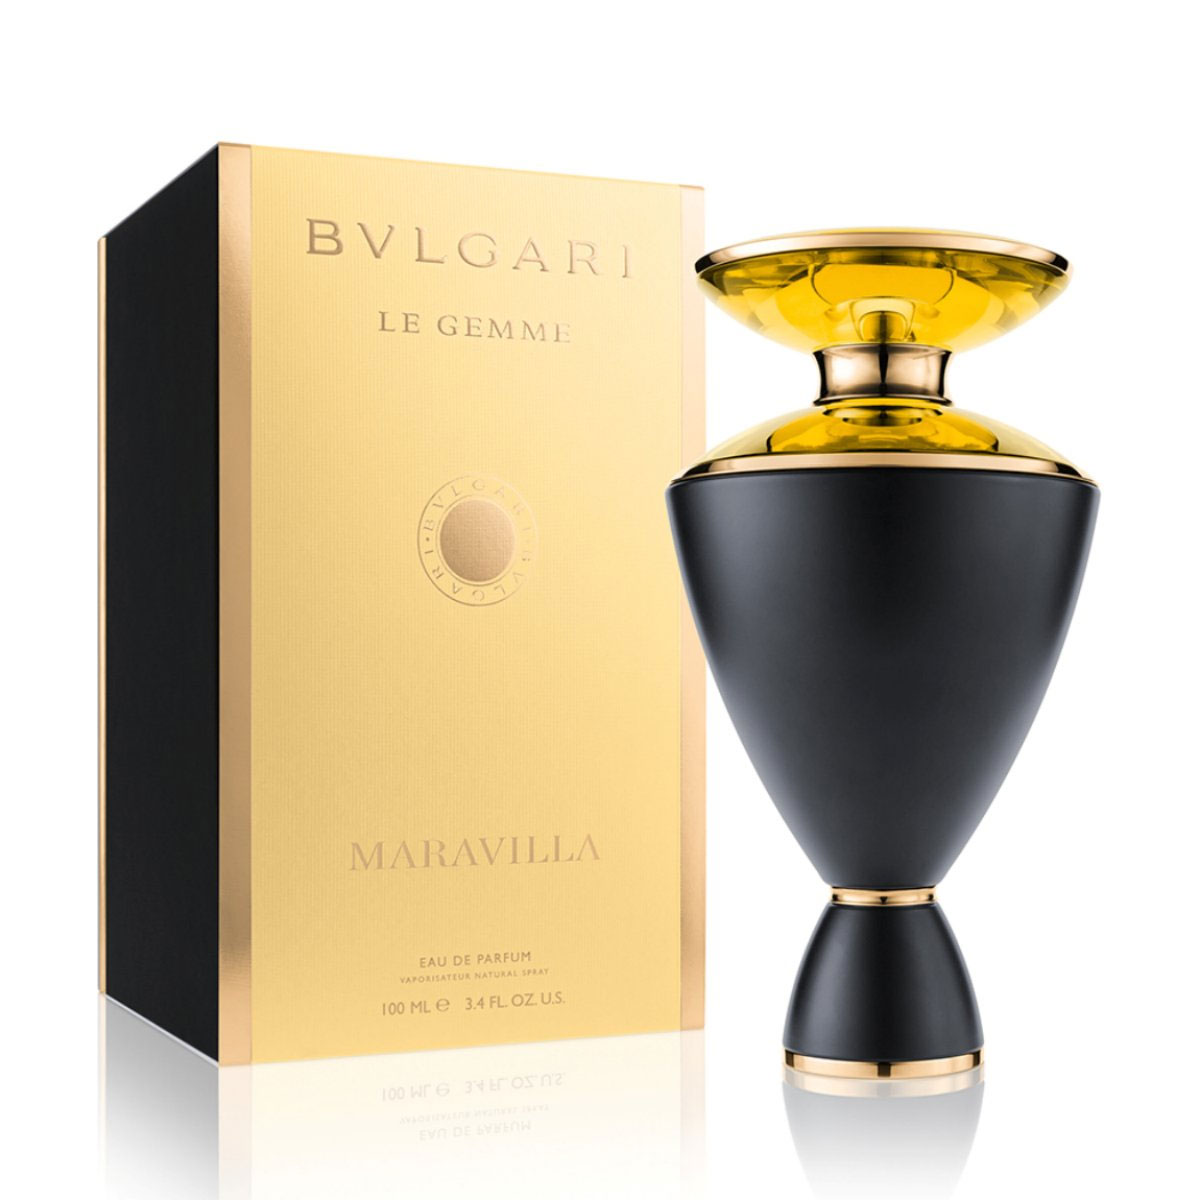 bulgari new perfume 2016